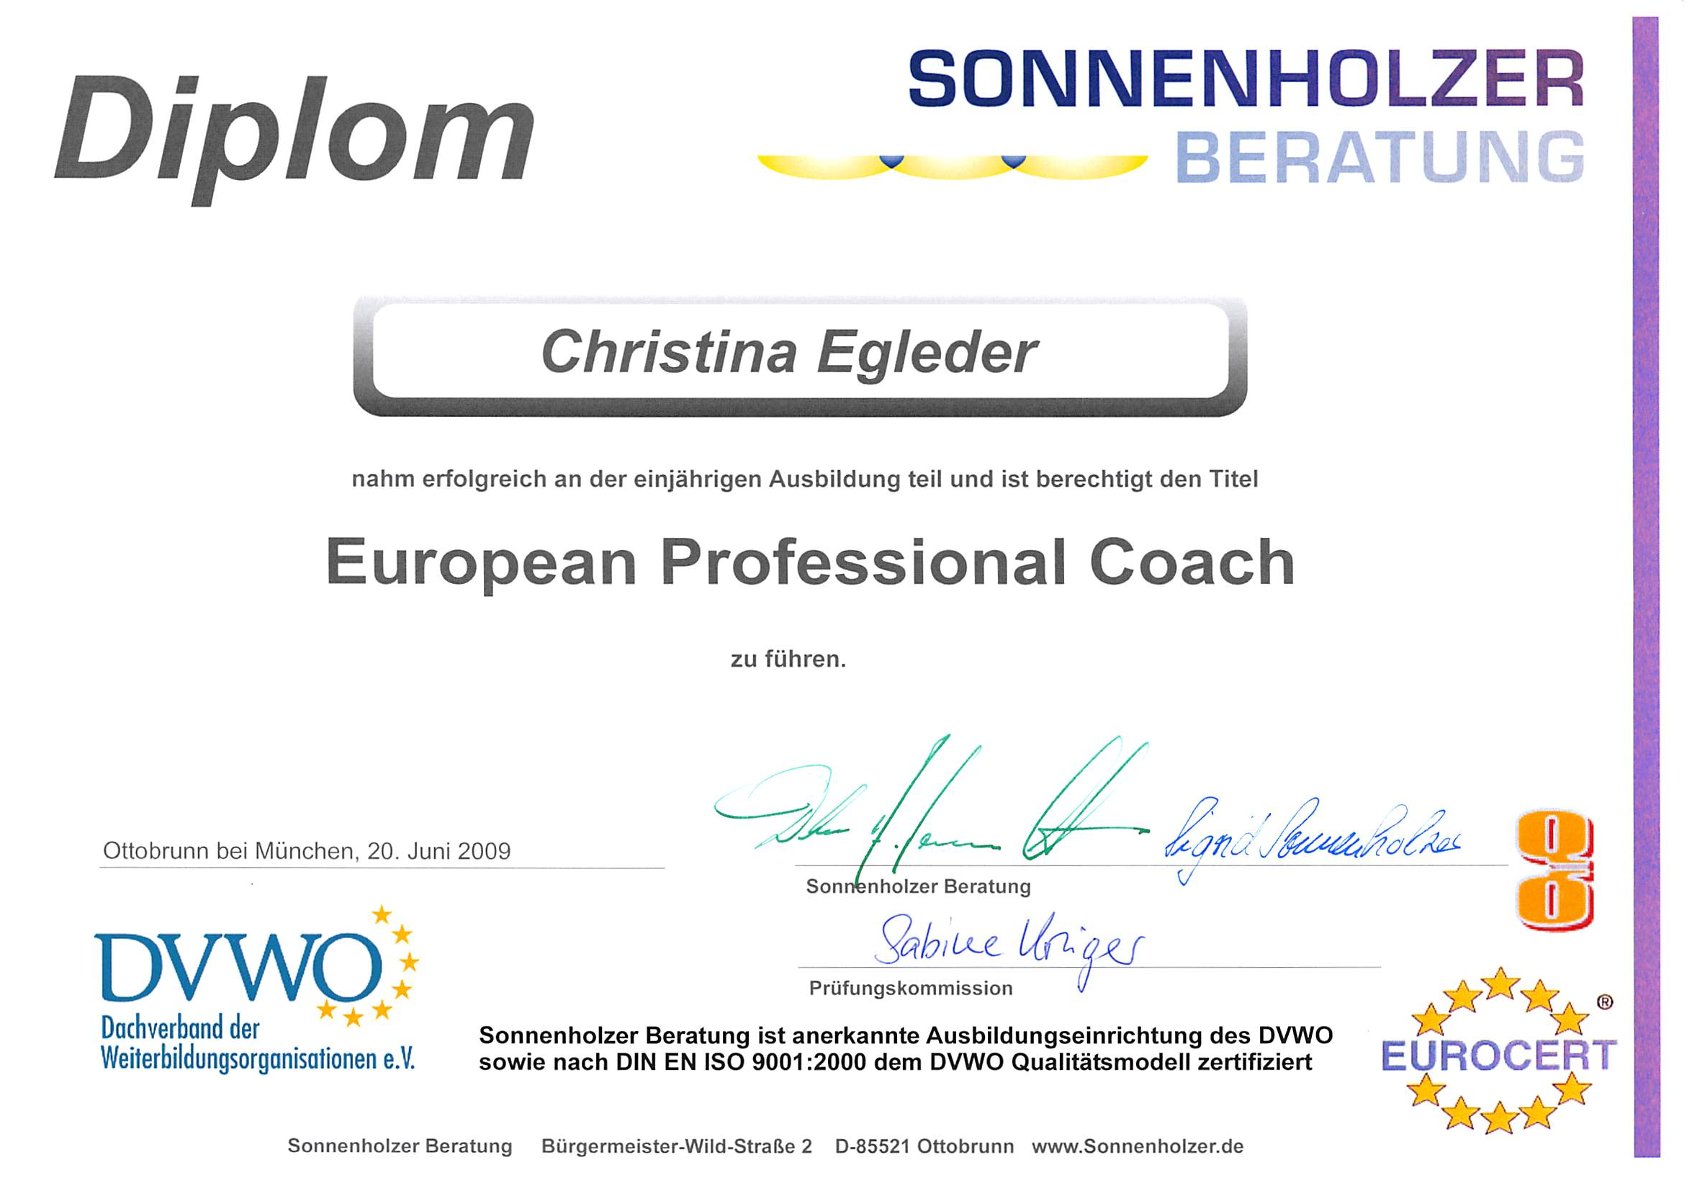 European Professional Coach Sonnenholzer